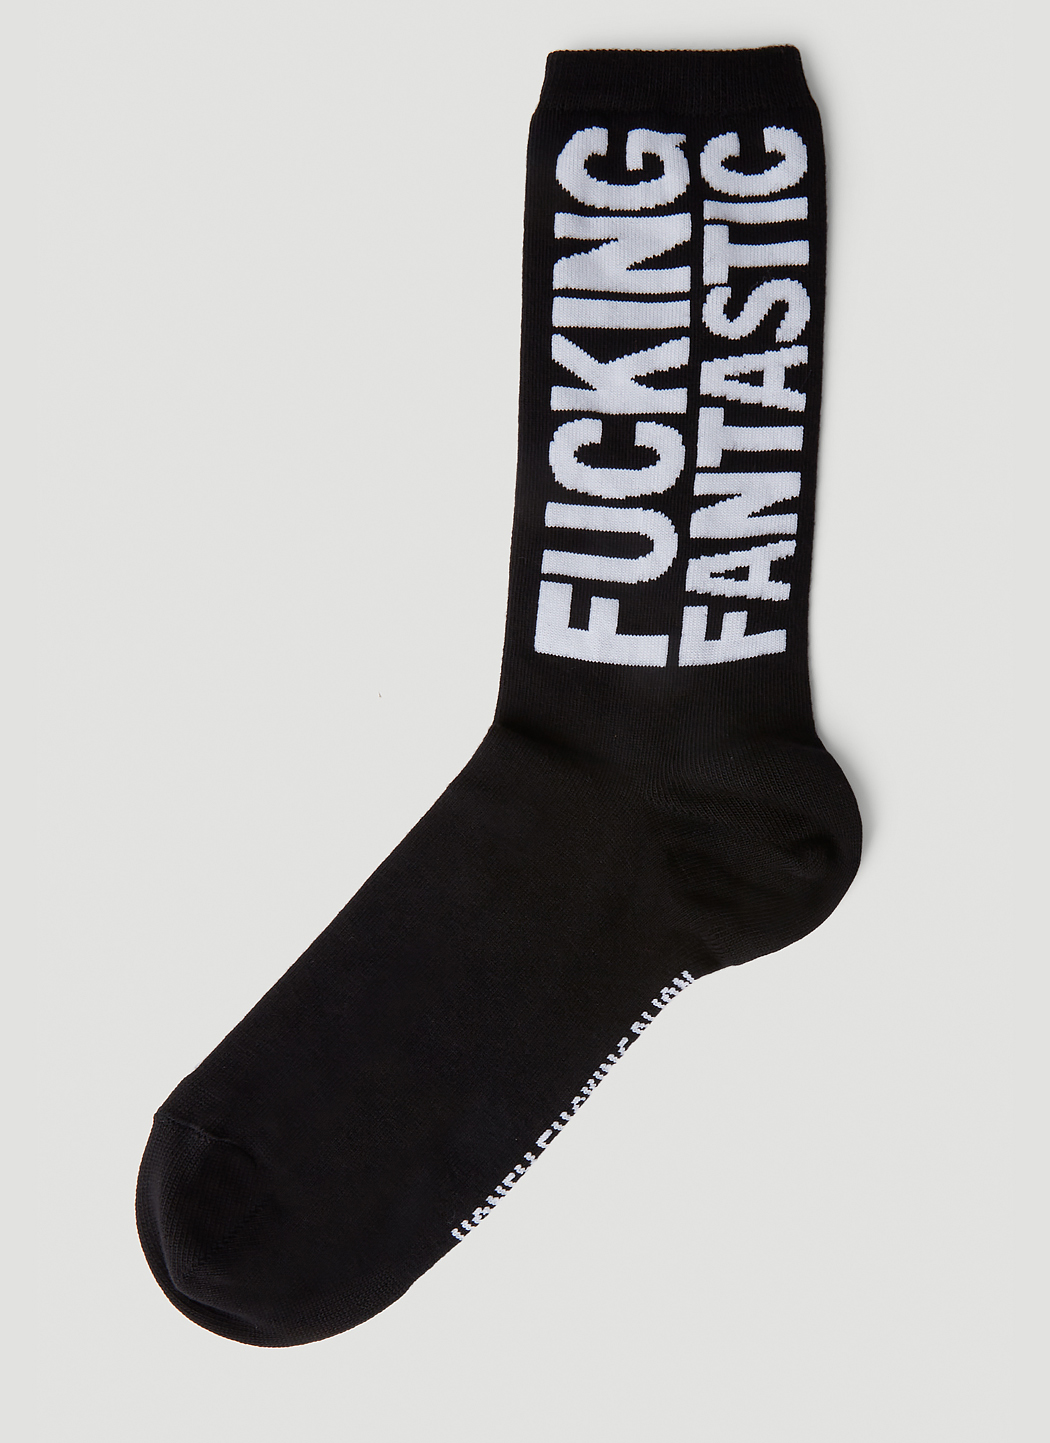 Fantastic Socks